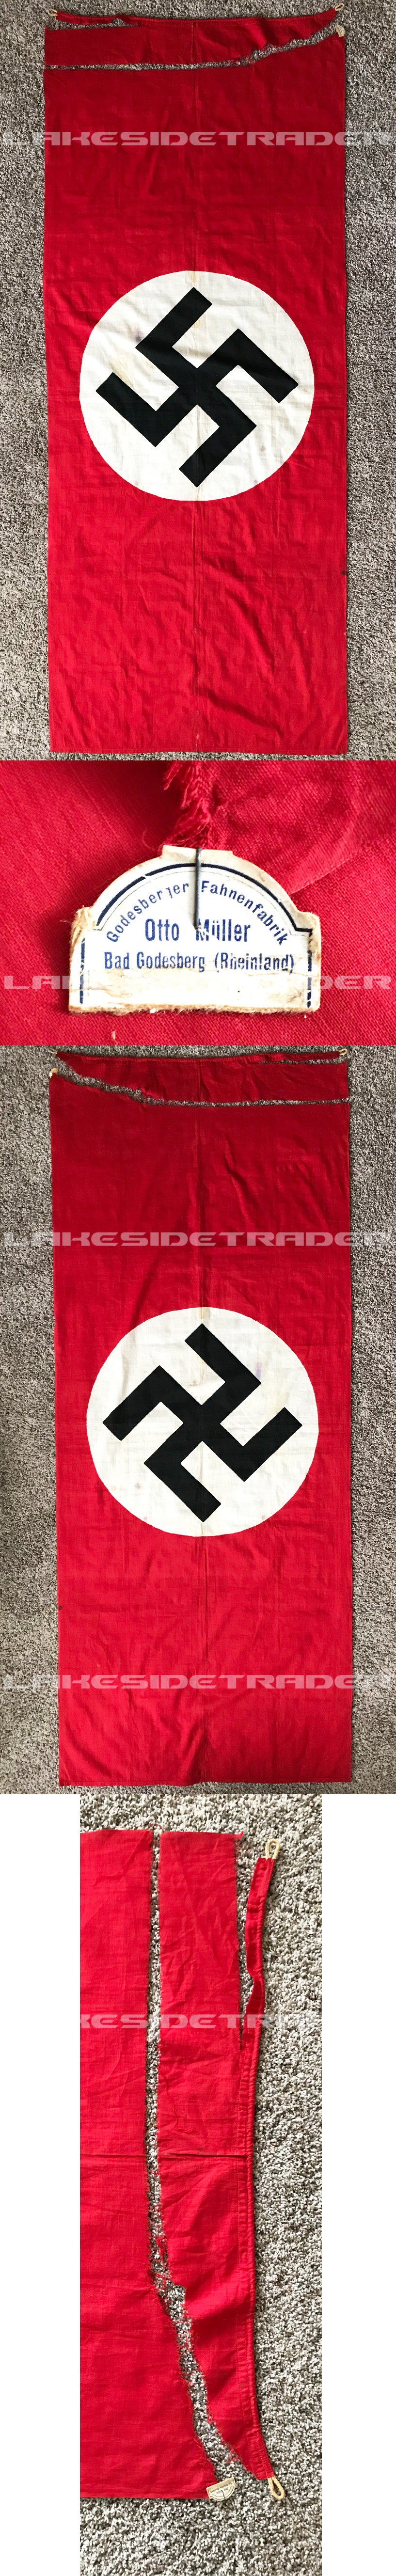 Tagged – NSDAP Medium Banner by Otto Muller